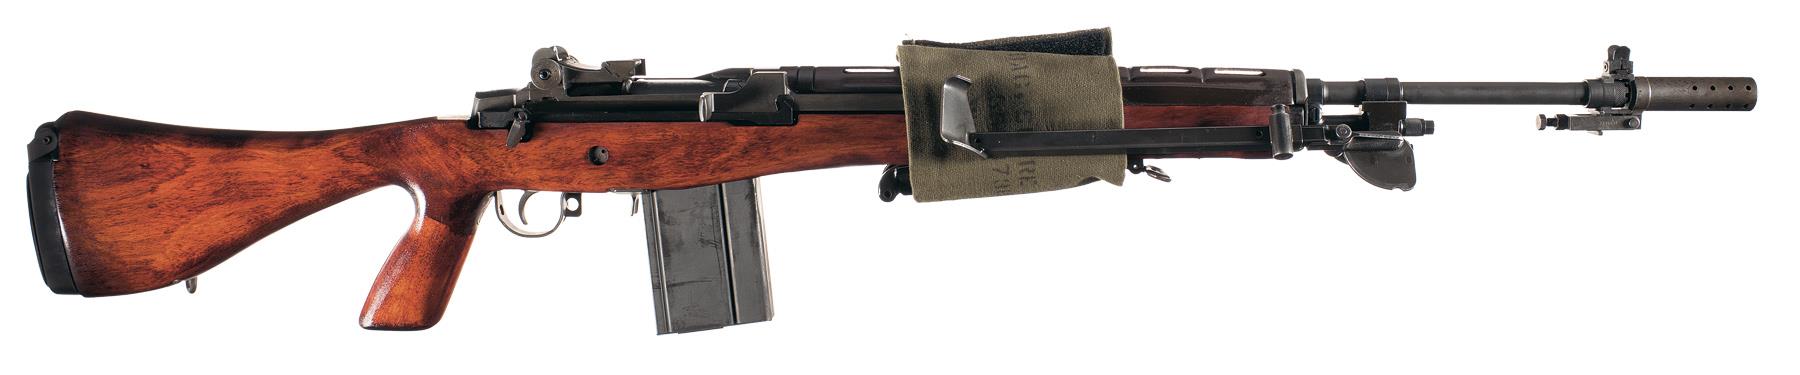 Desirable Fully Automatic Smith Enterprise Class III M14E2 Rifle.